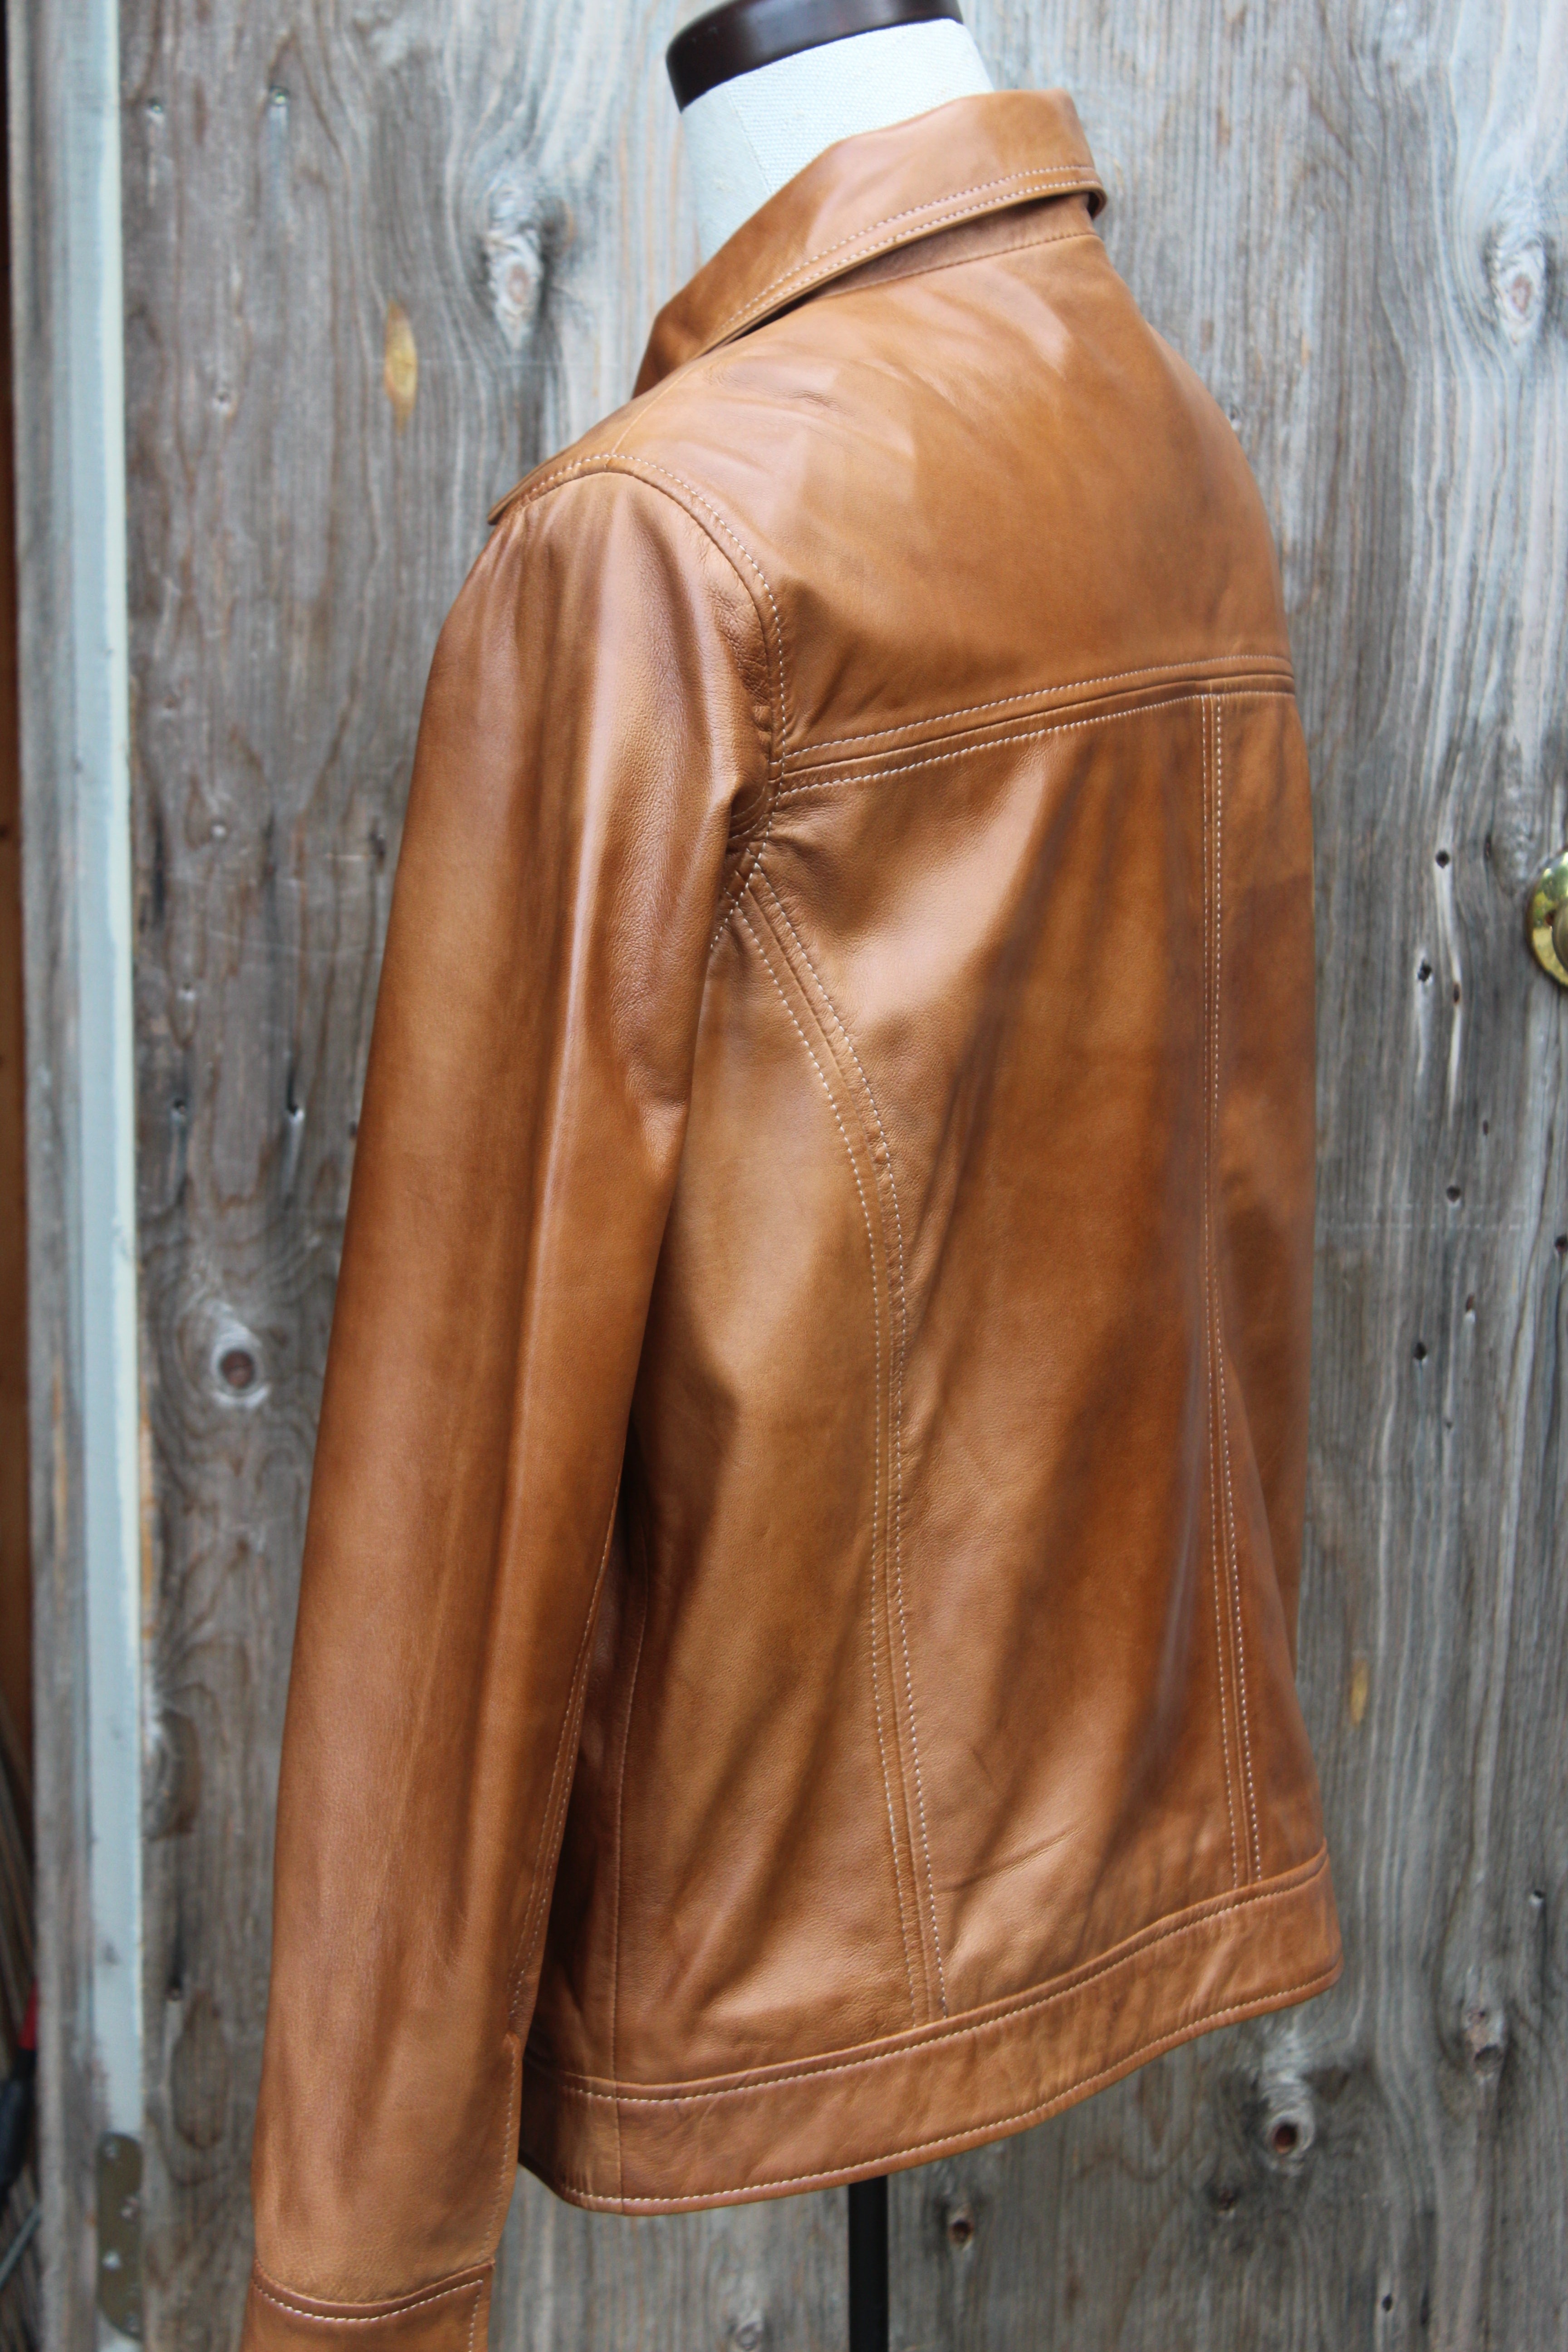 Cognac Leather- $450.00
Plonge Leathers
Style #: 50409C